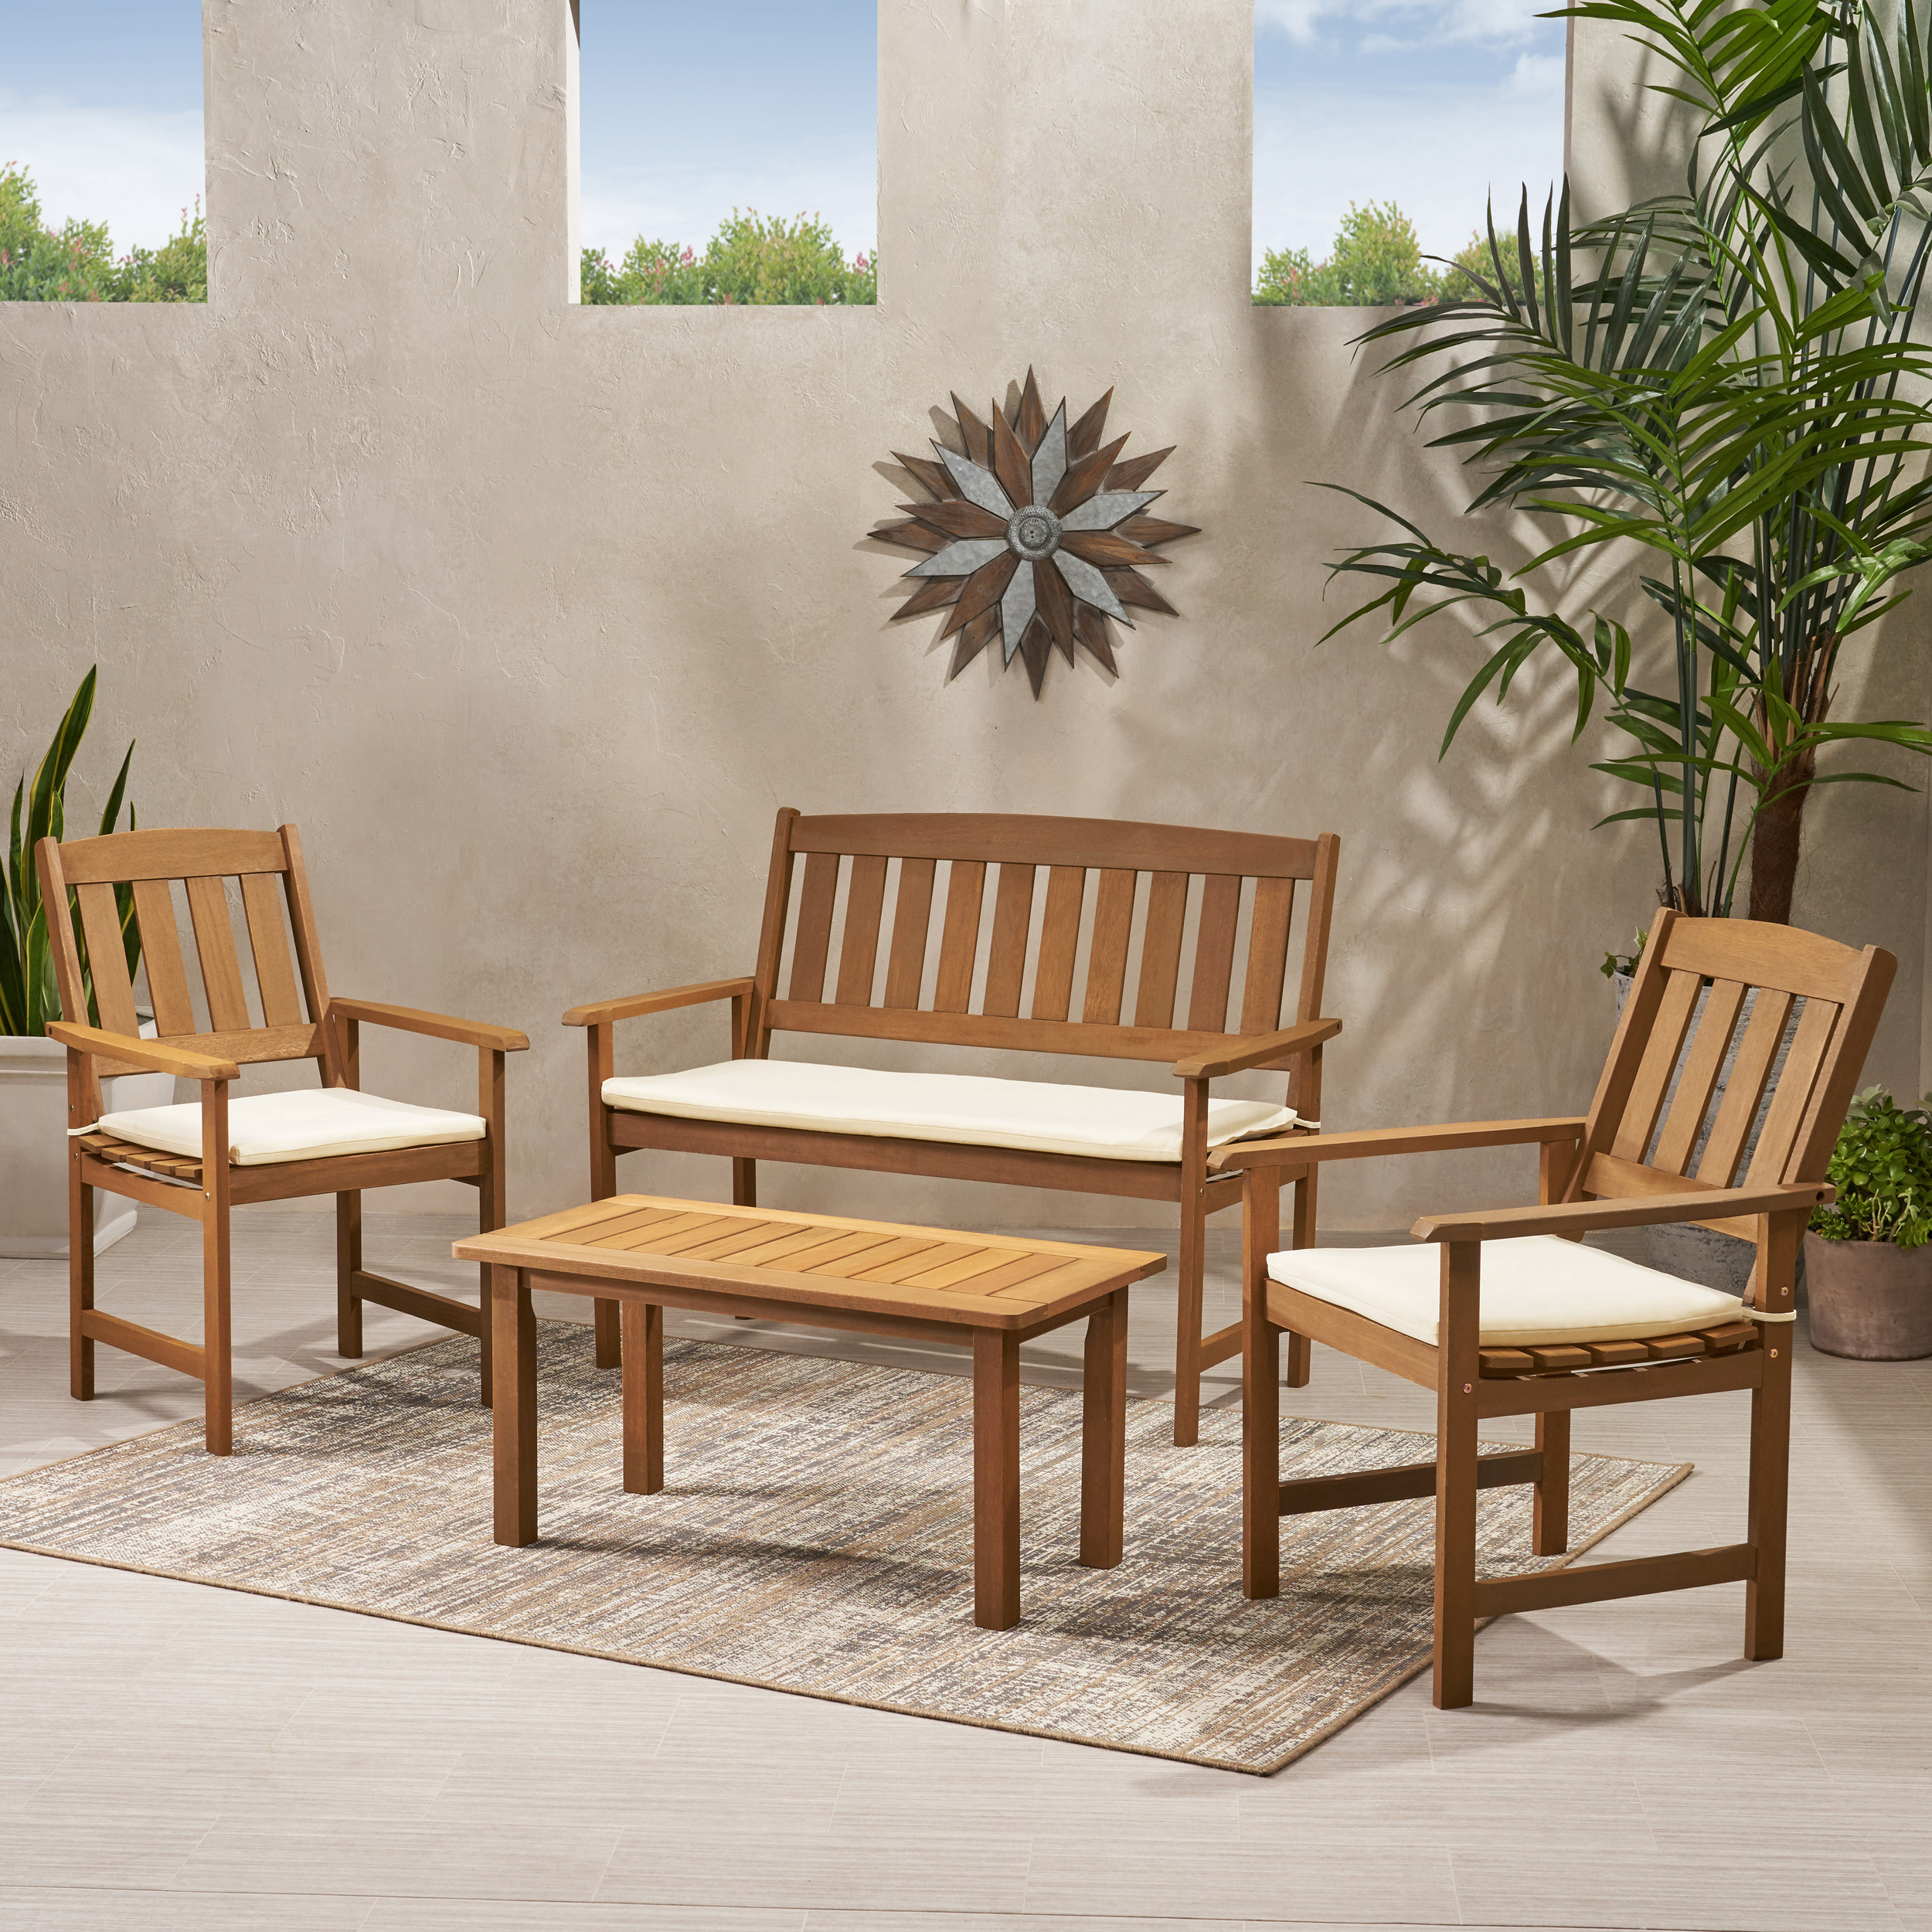 Emilia Outdoor Meranti 4 piece Wood Chat Set with Cushions, Honey Oak, Cream - image 2 of 8